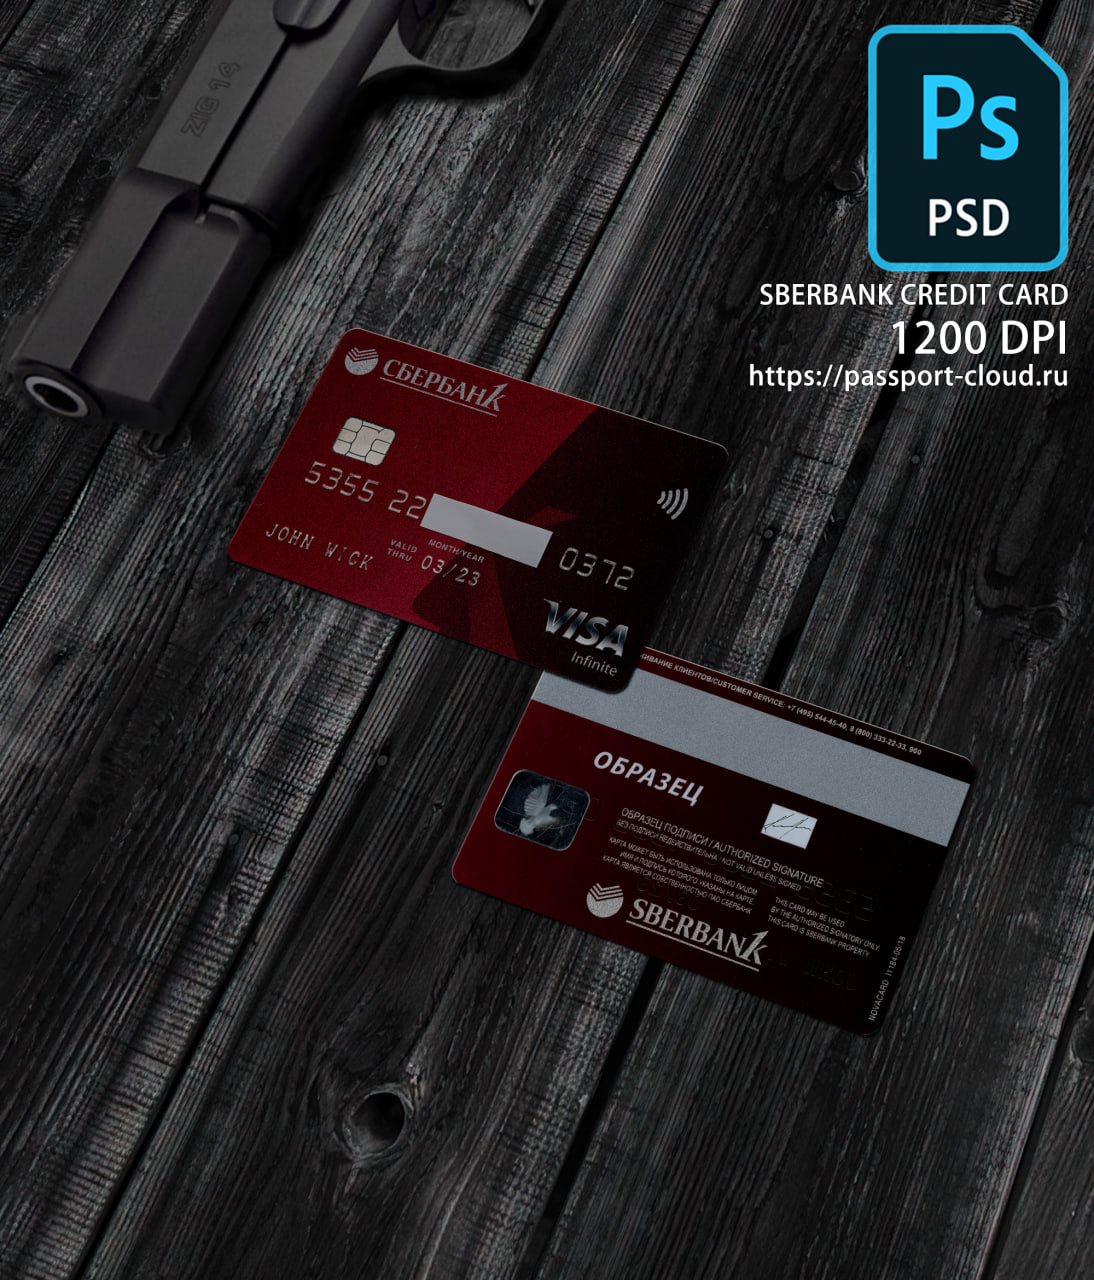 Sberbank Credit Card PSD-0